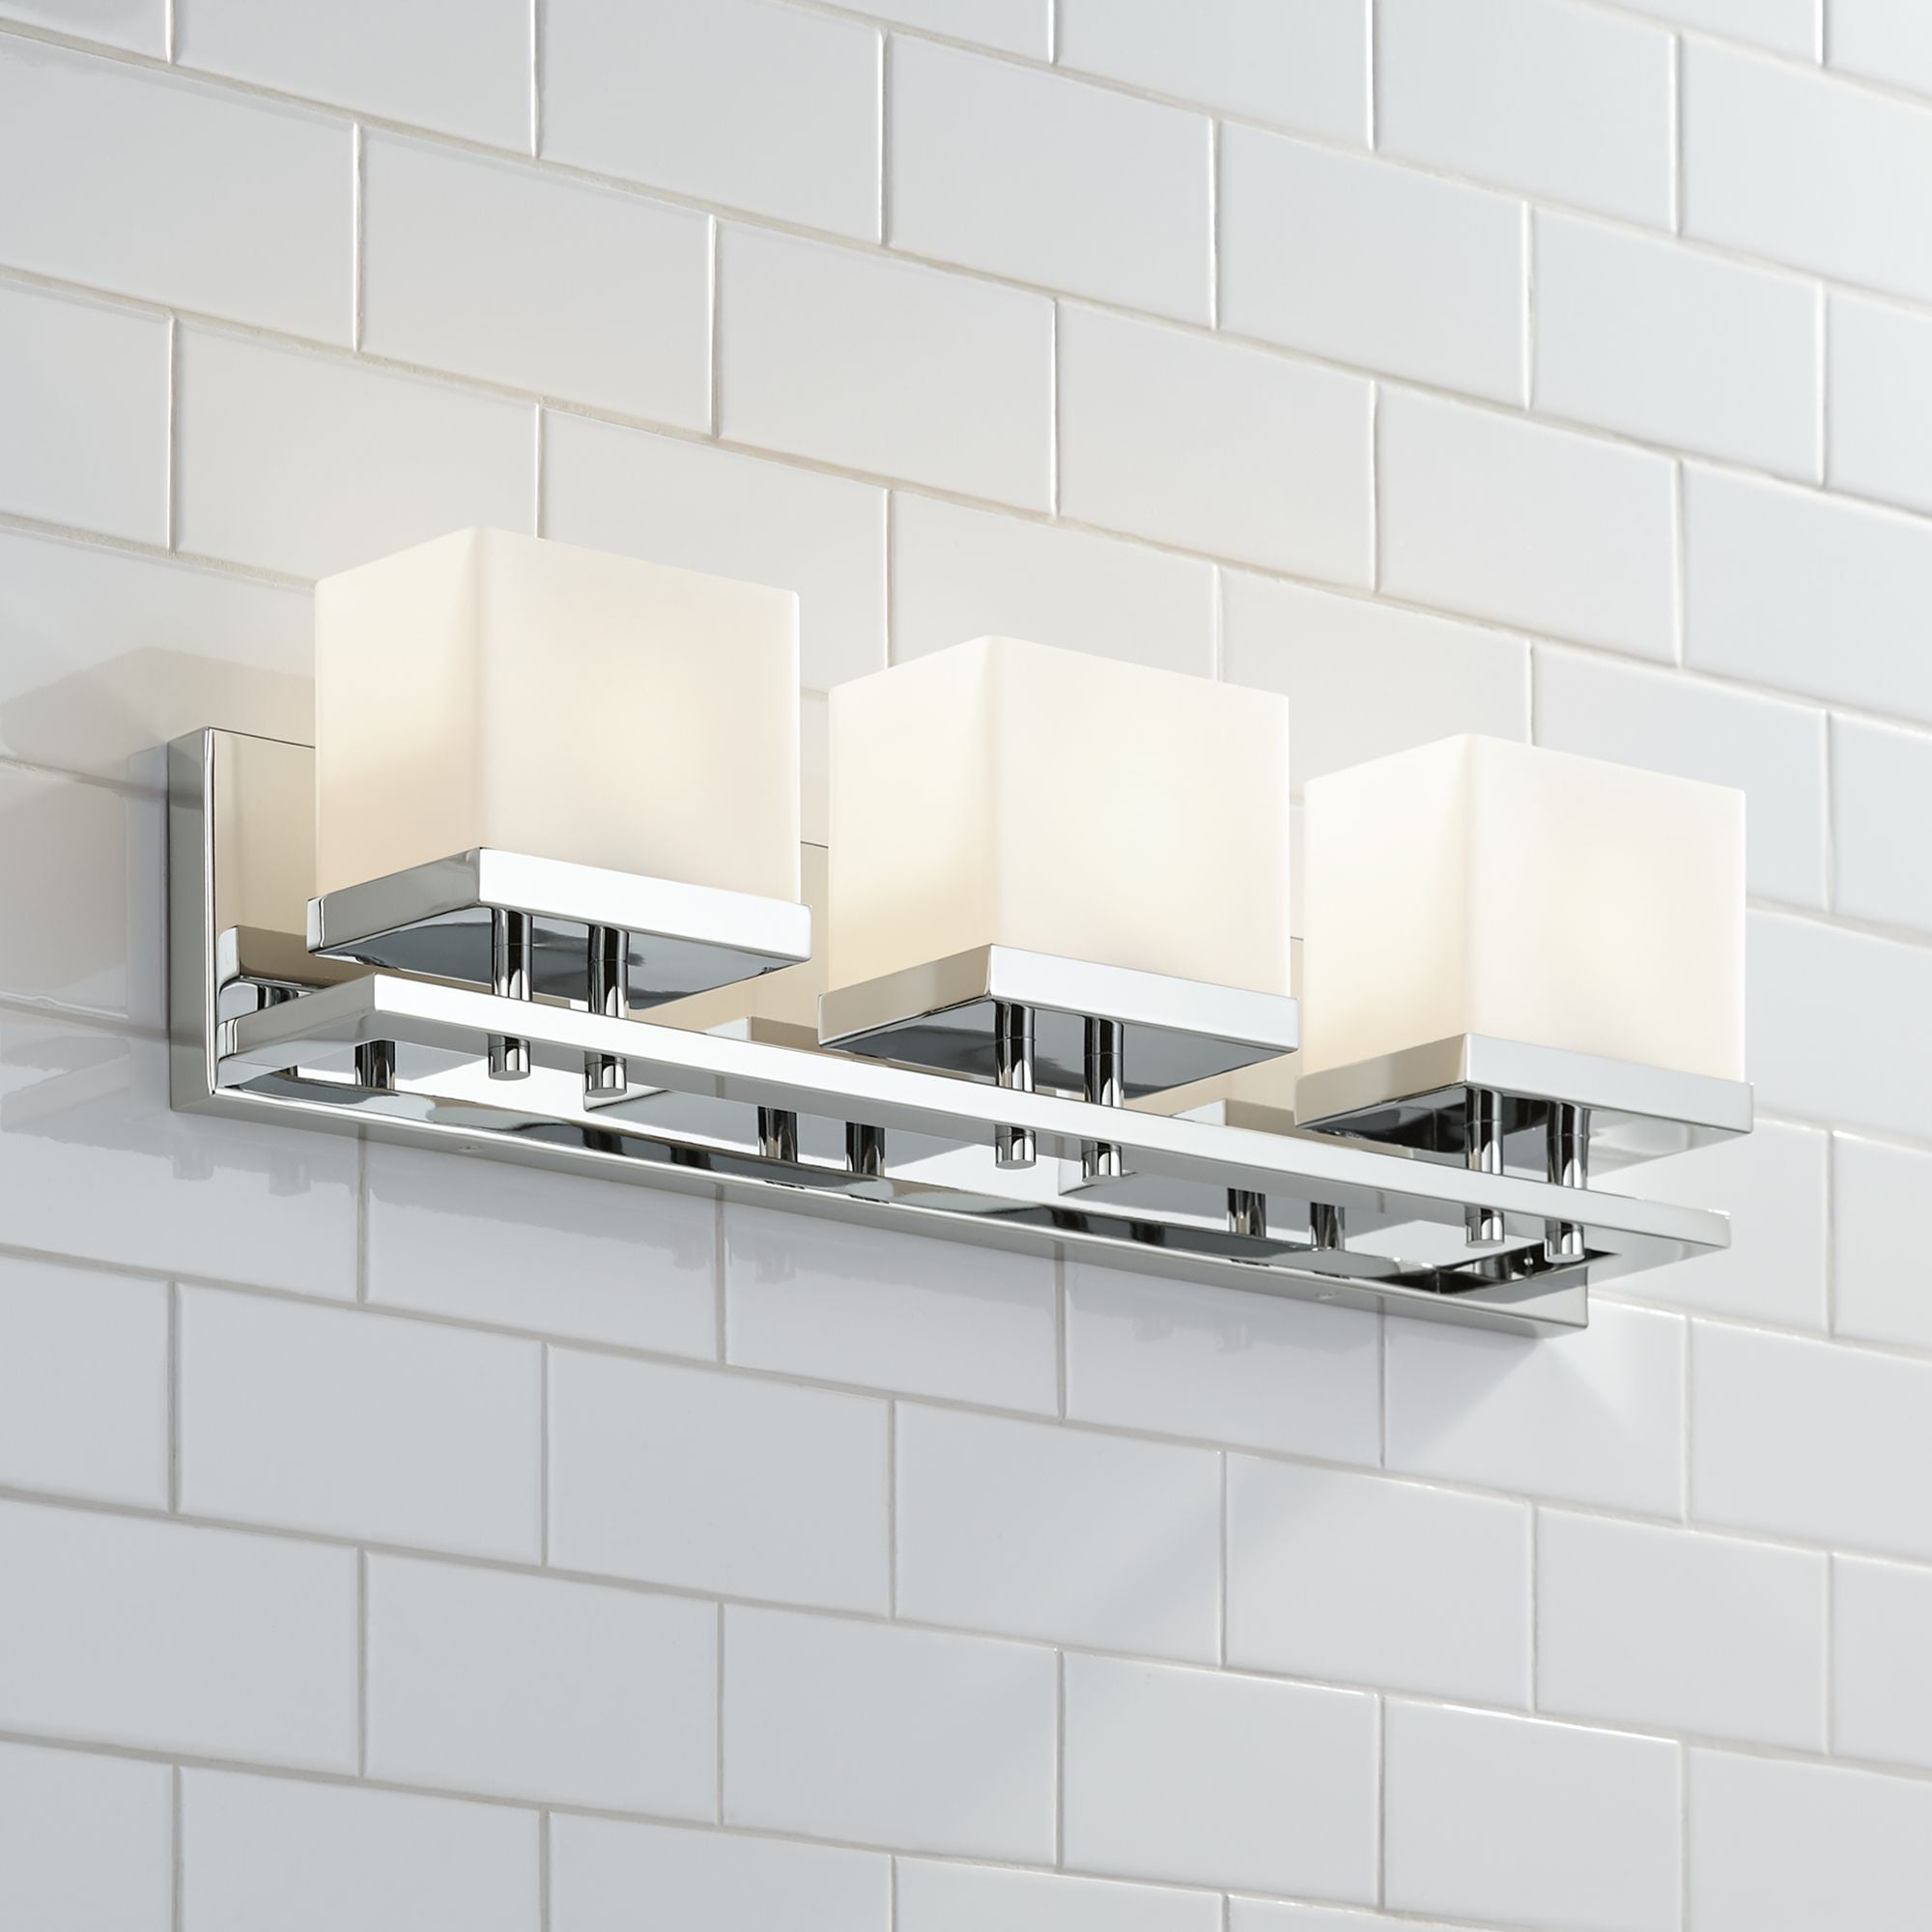 glass shades New chrome designer bathroom wall lights 